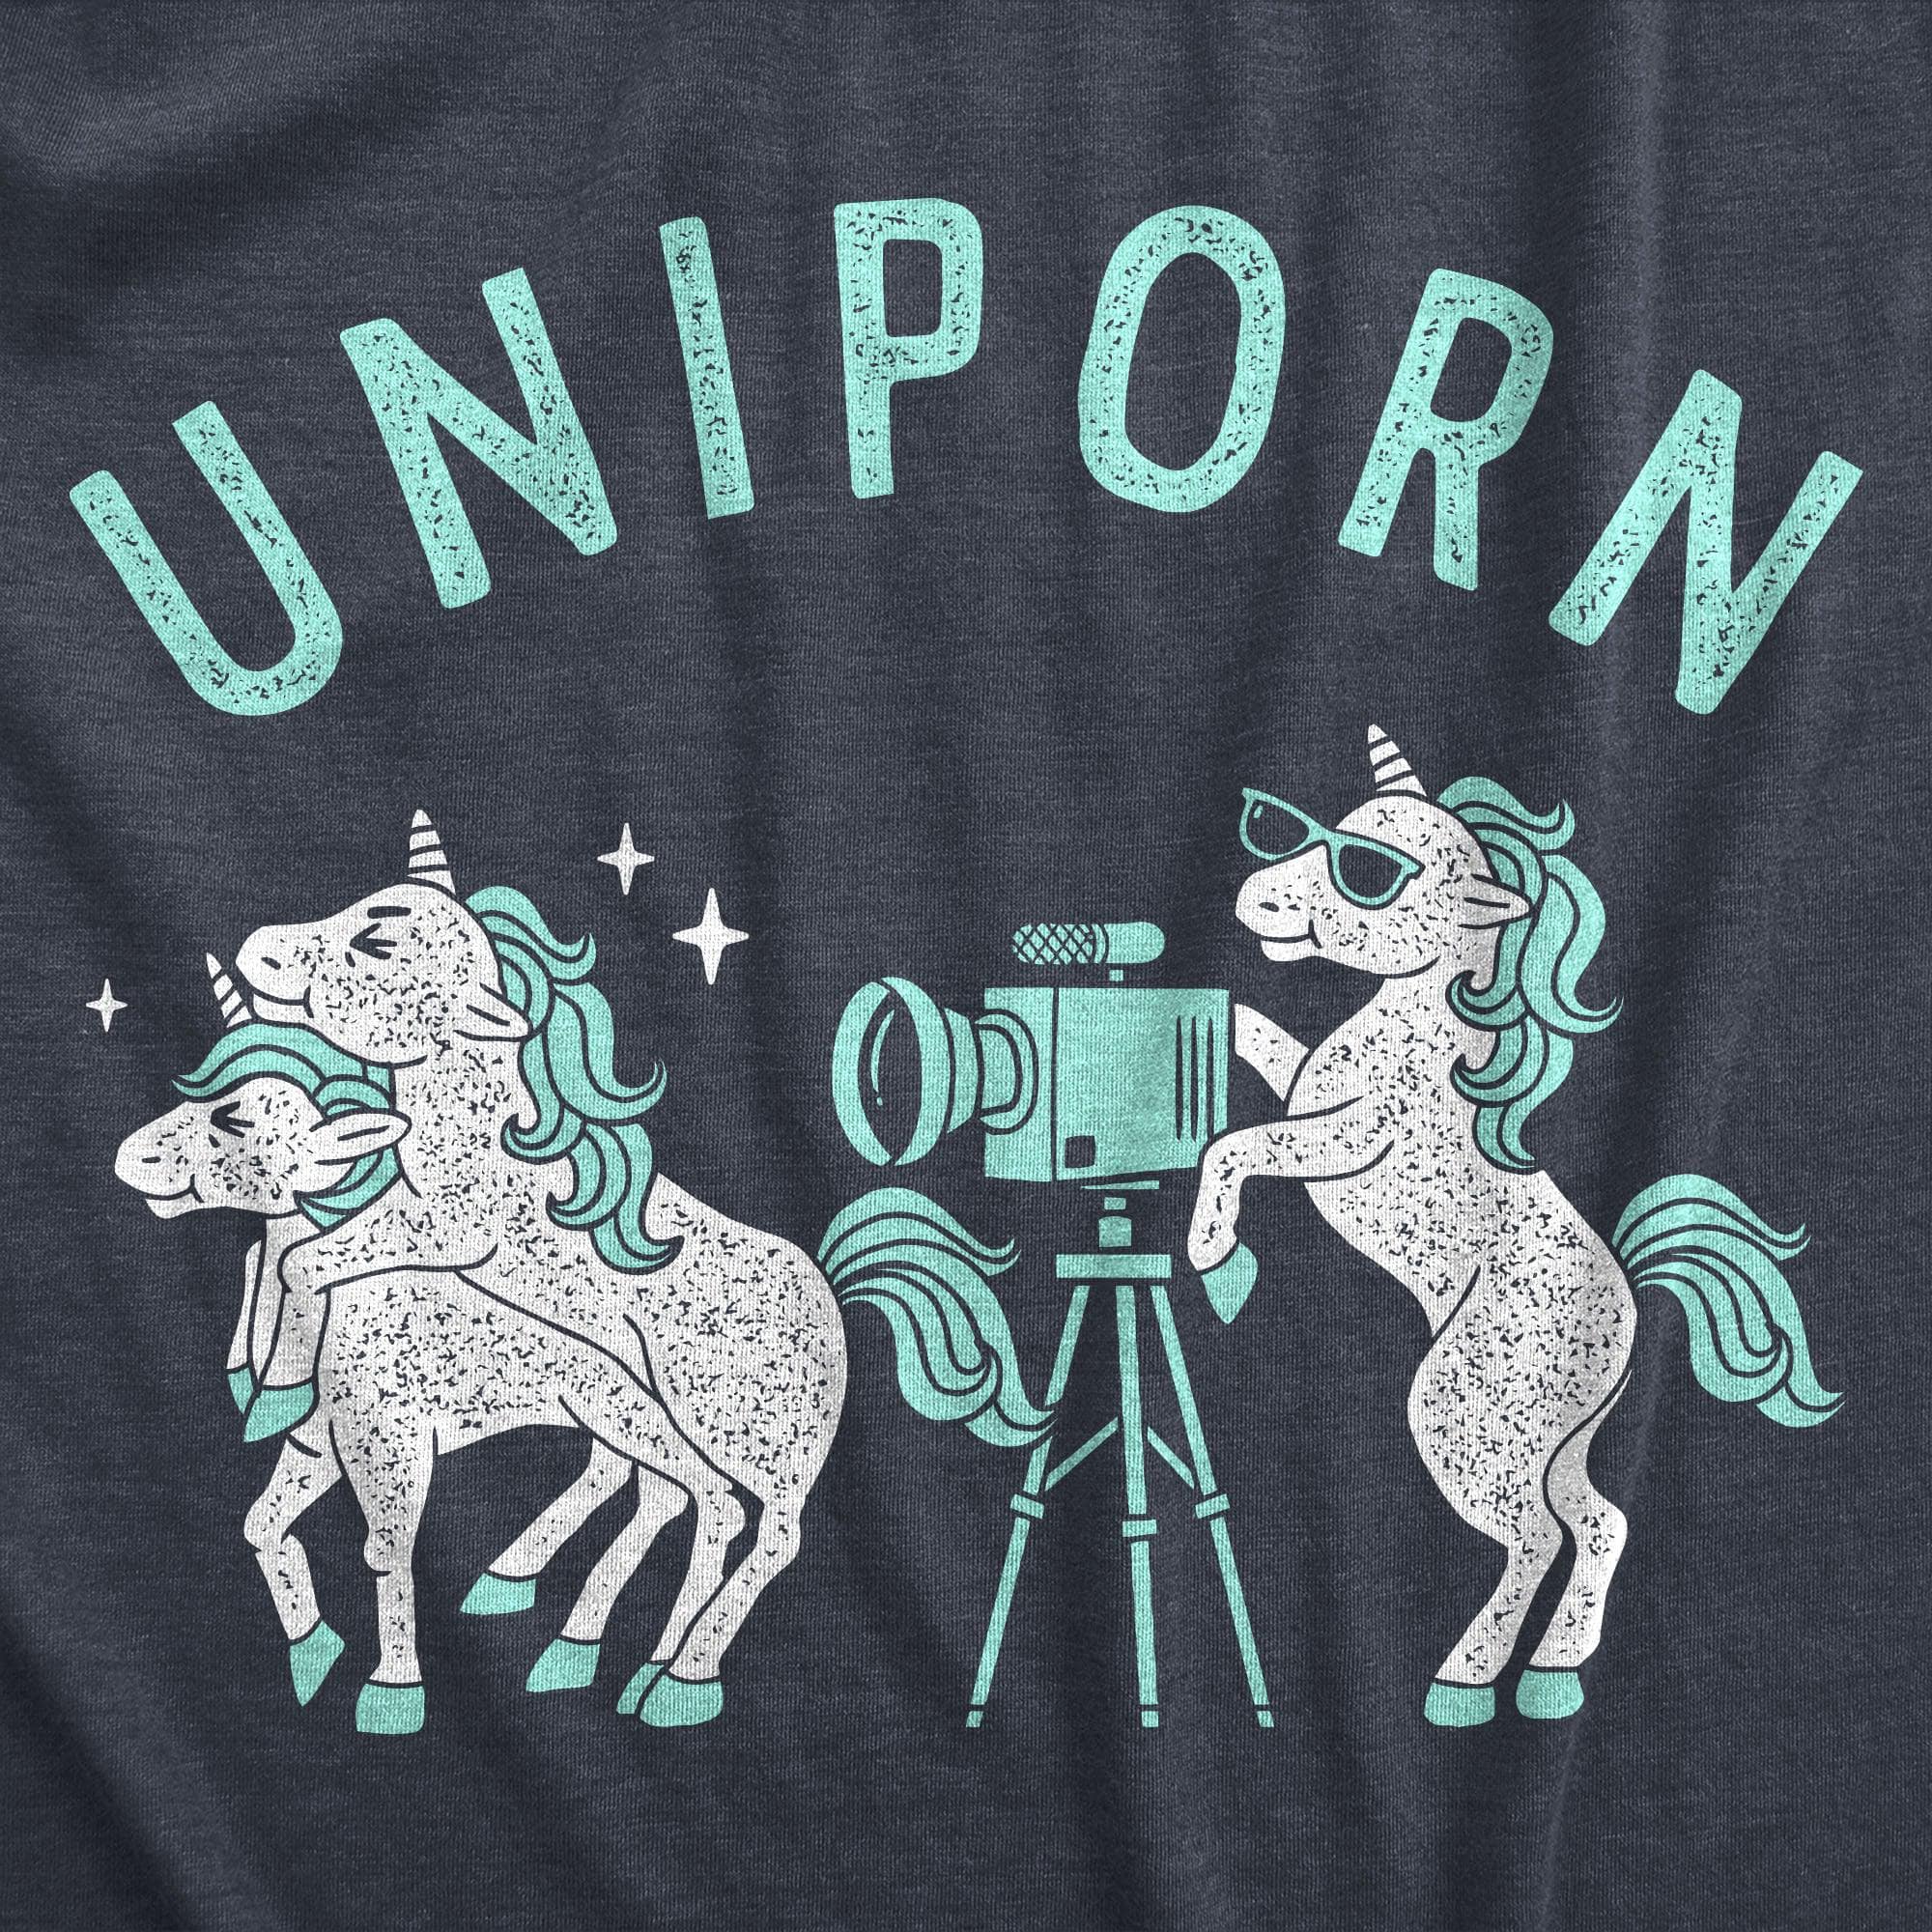 Uniporn Men's Tshirt  -  Crazy Dog T-Shirts